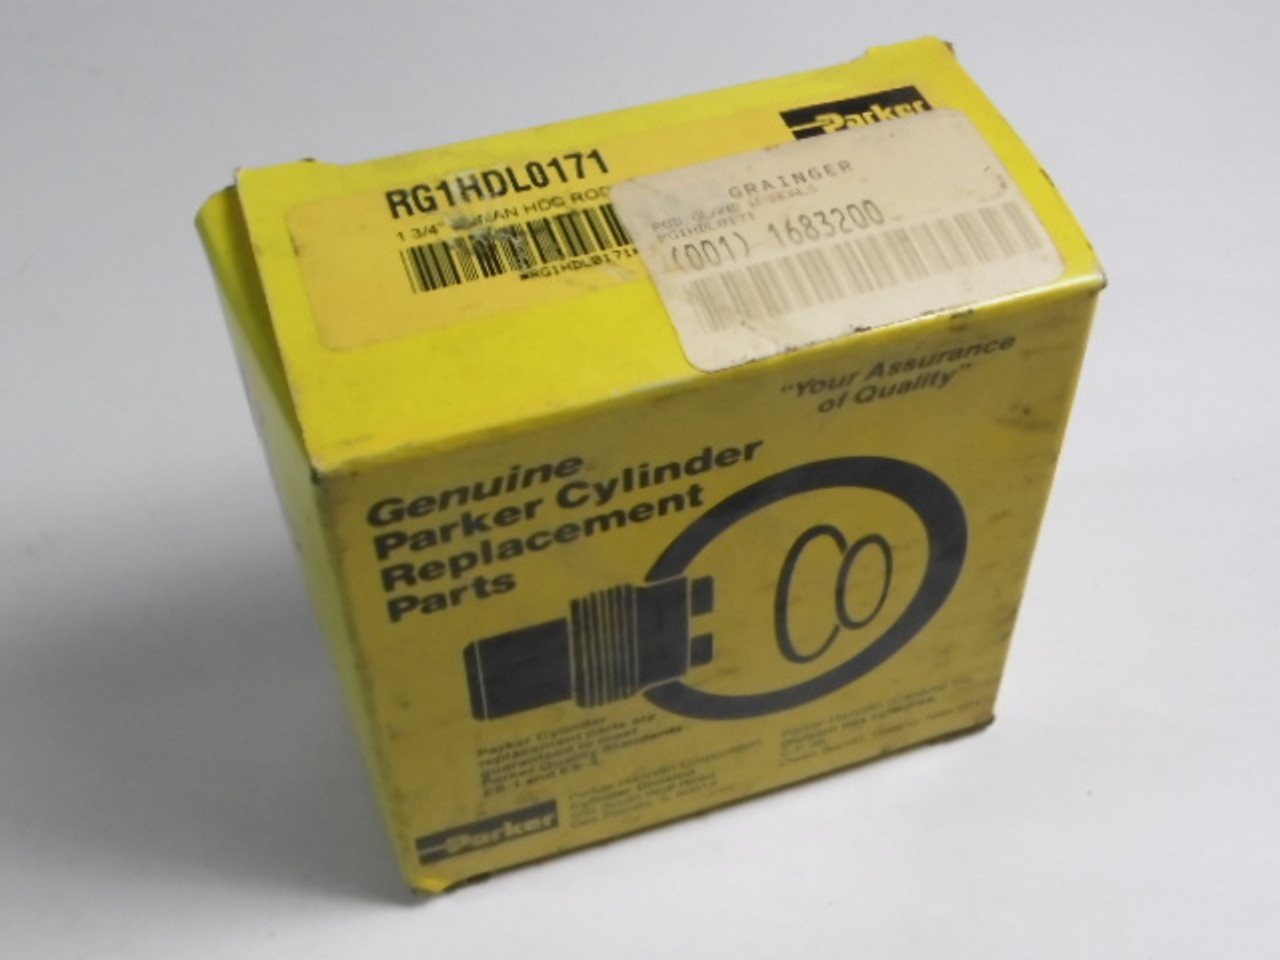 Parker RG1HDL0171 Gland Cartridge Kit 1-3/4" ! NEW !